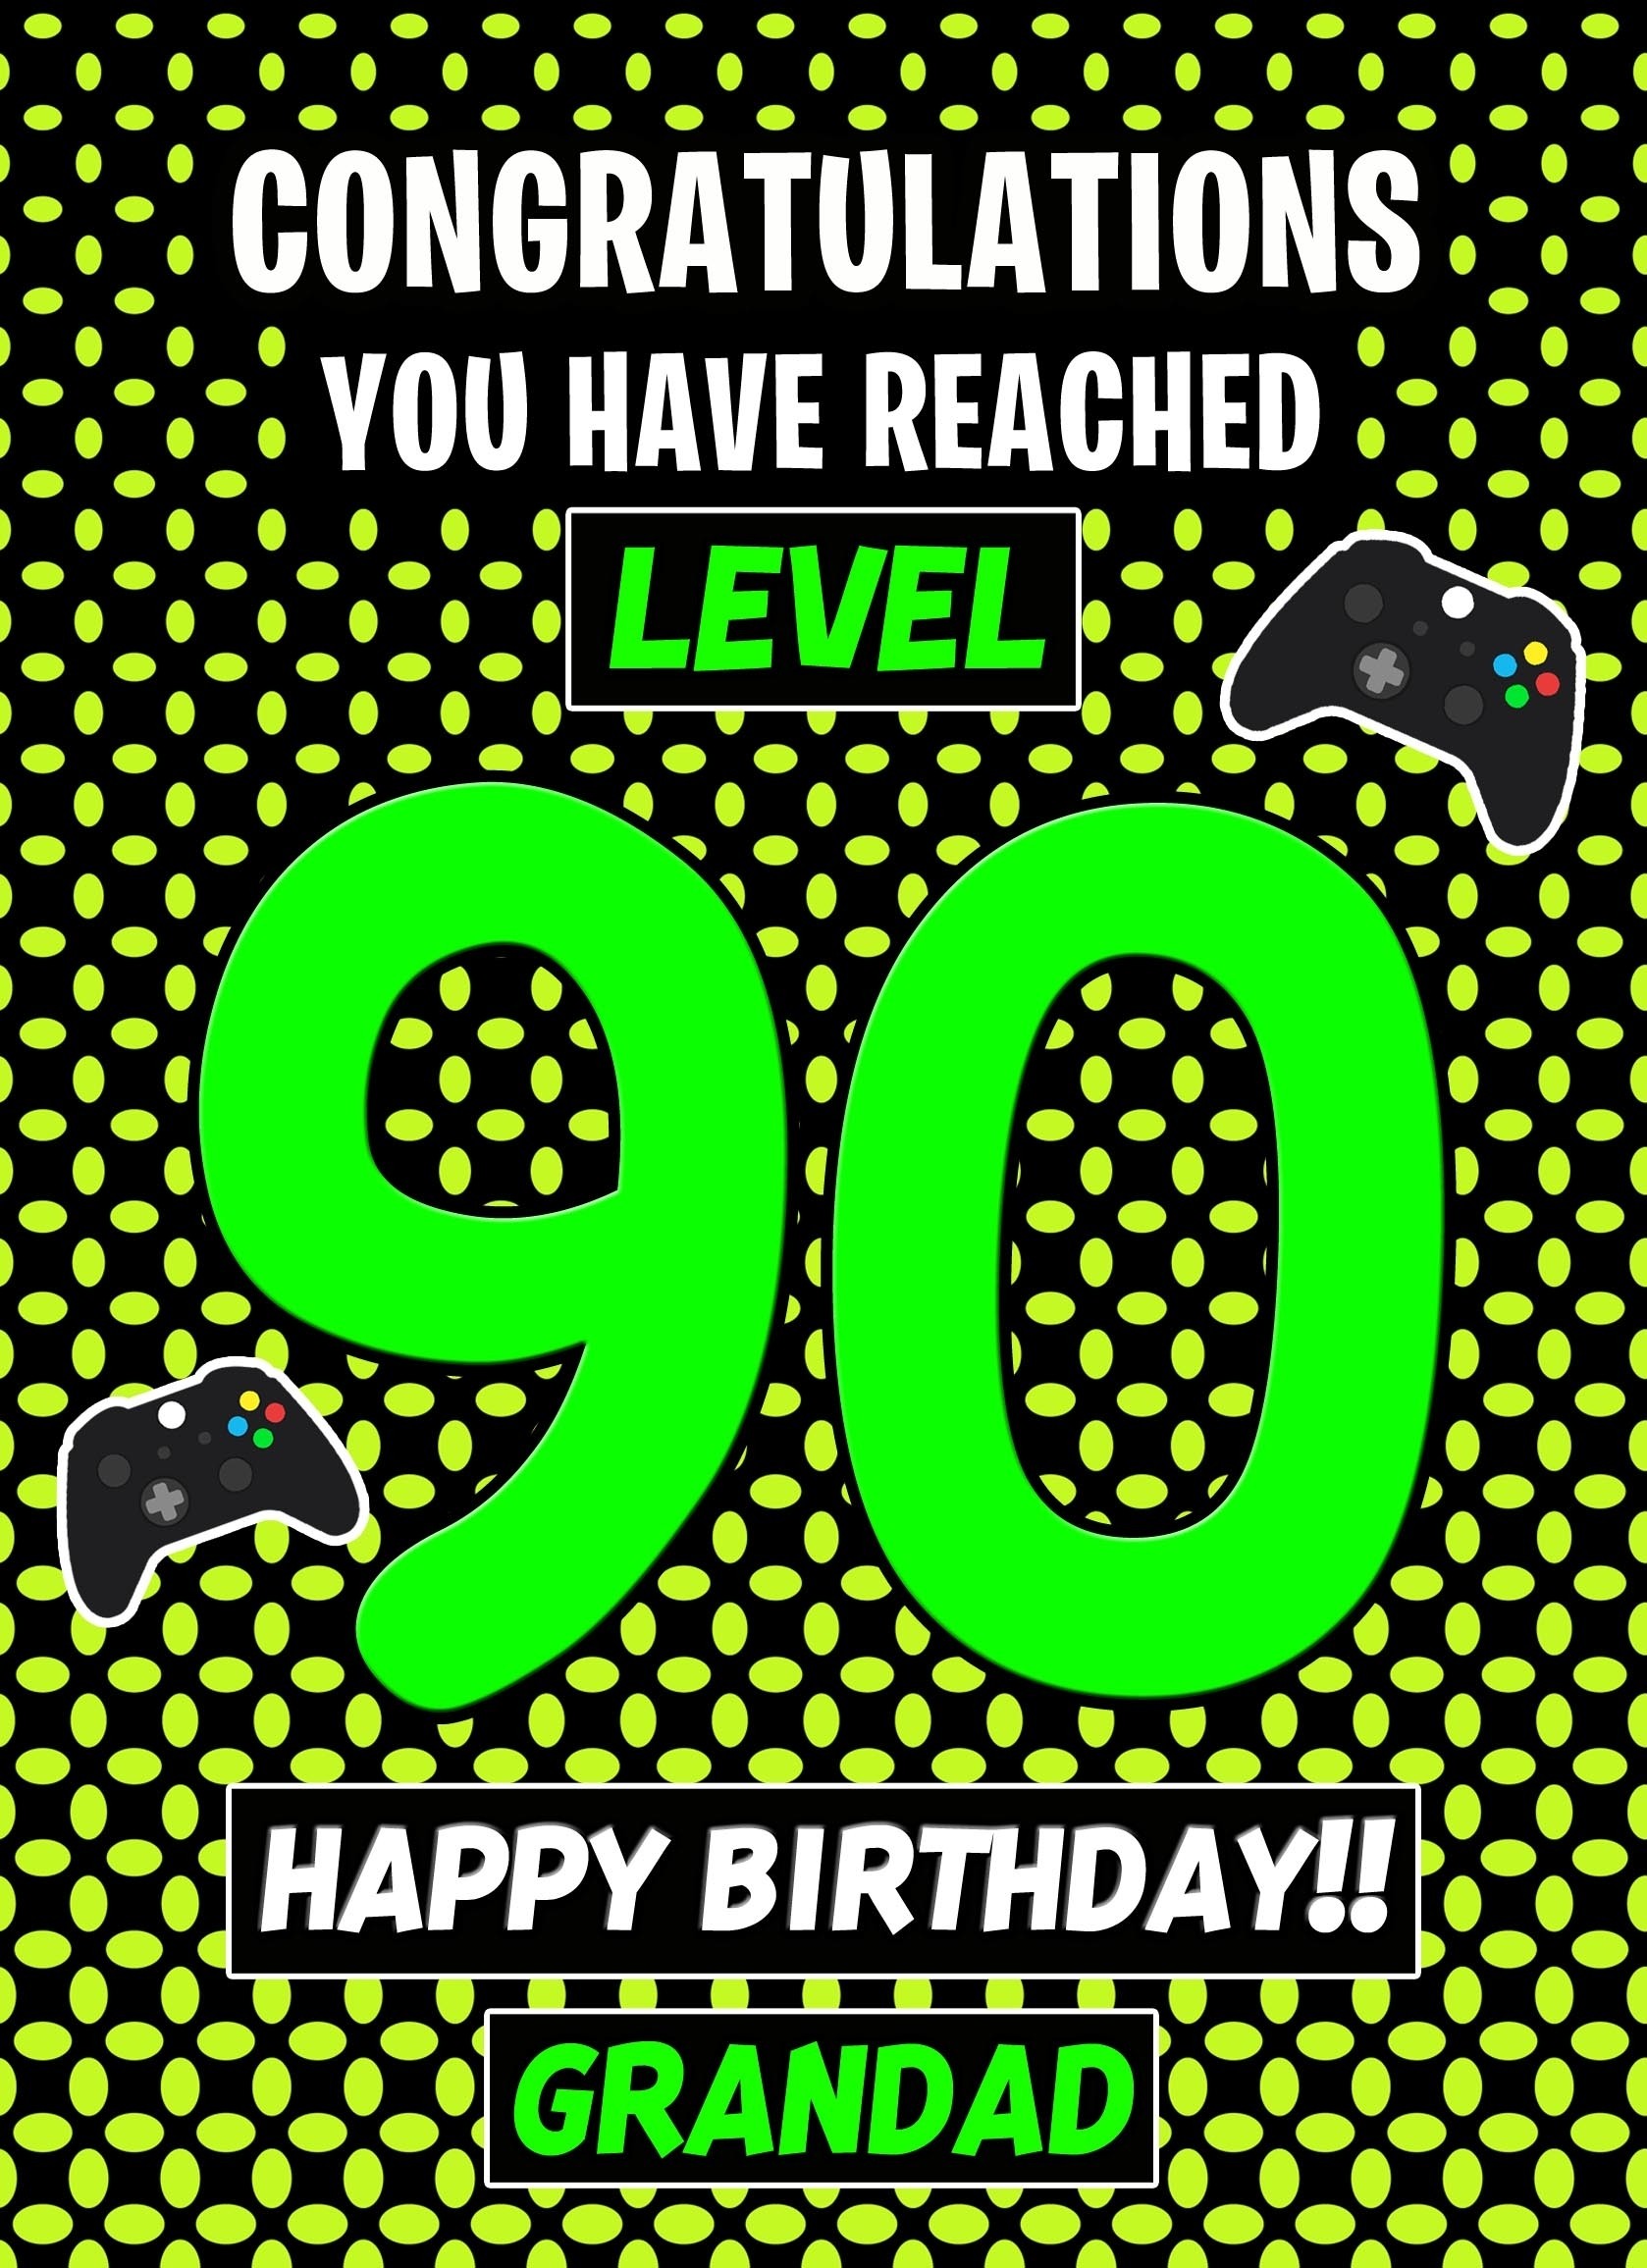 Grandad 90th Birthday Card (Level Up Gamer)